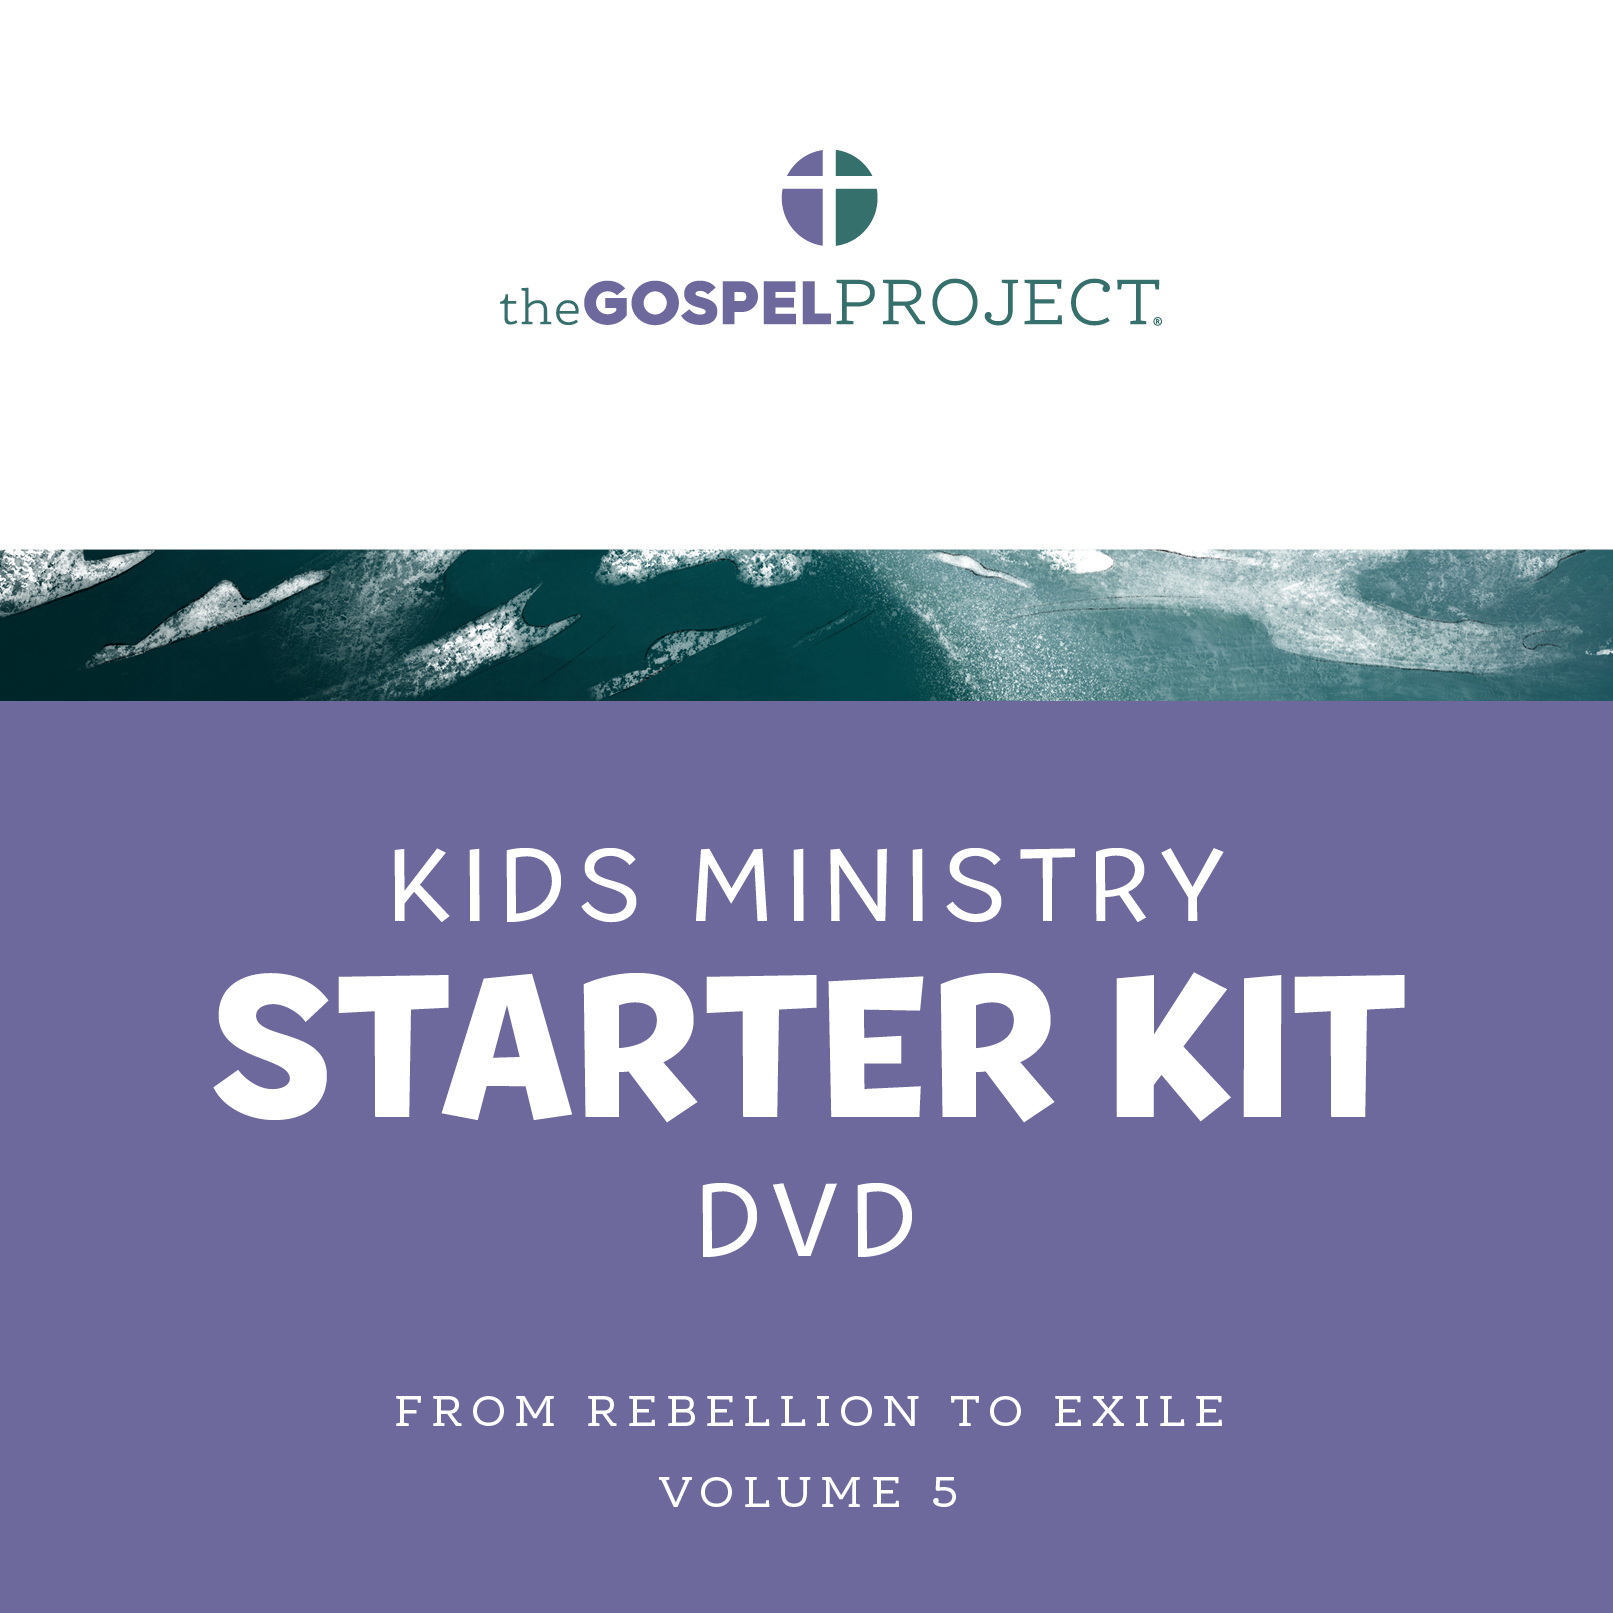 Gospel Project for Kids: Kids Ministry Starter Kit Extra DVD - Volume 5: From Rebellion to Exile